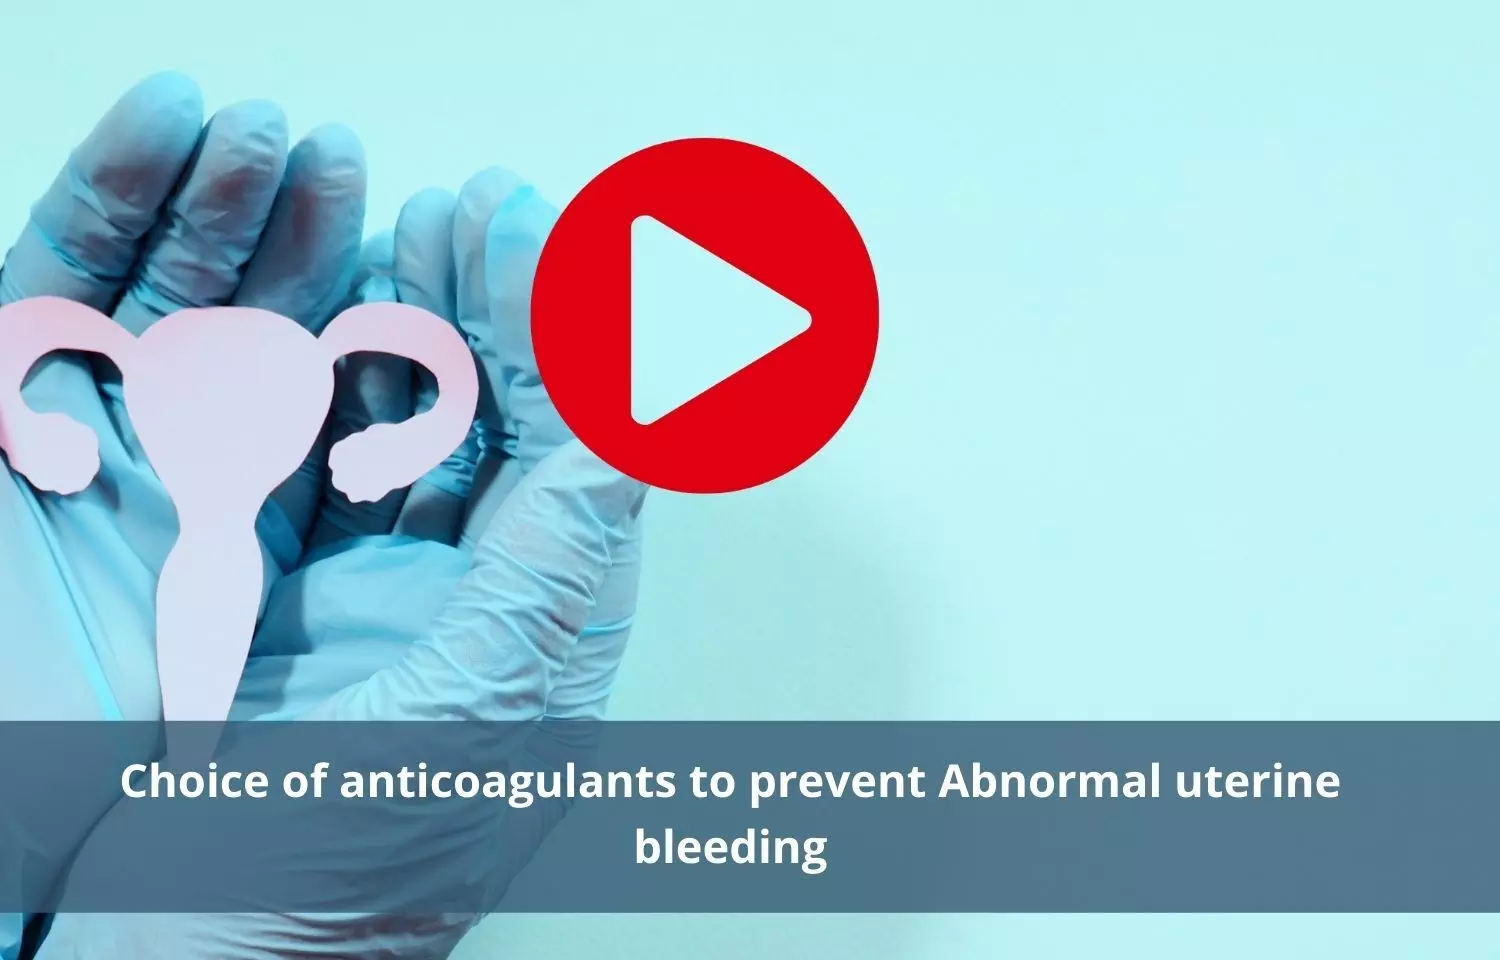 Choosing anticoagulants to prevent Abnormal uterine bleeding is essential